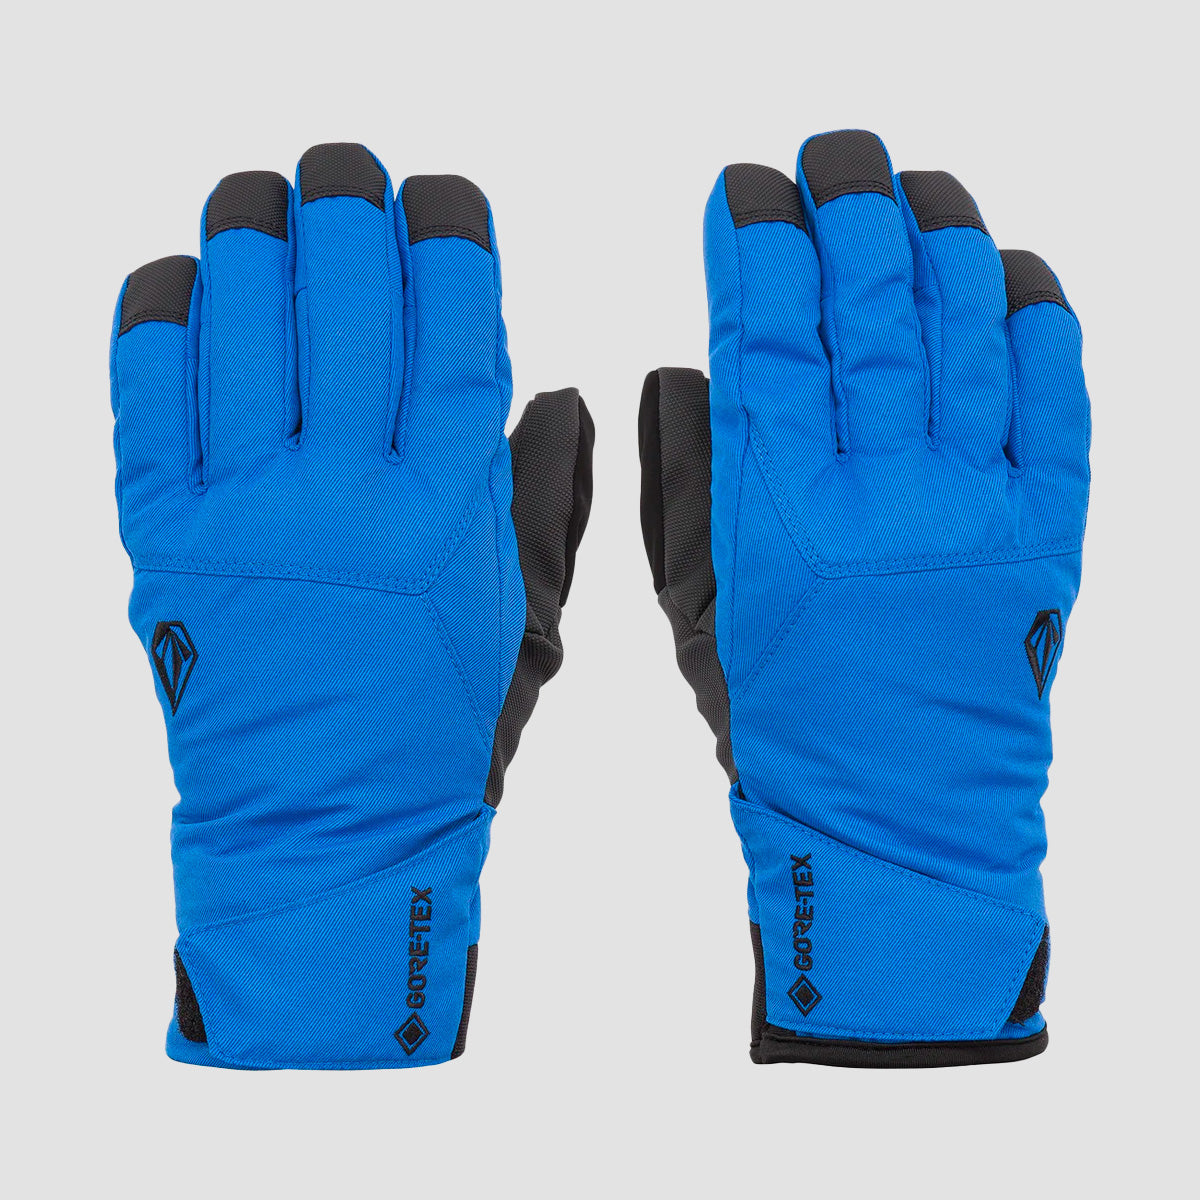 Volcom CP2 Gore-Tex Snow Gloves Electric Blue